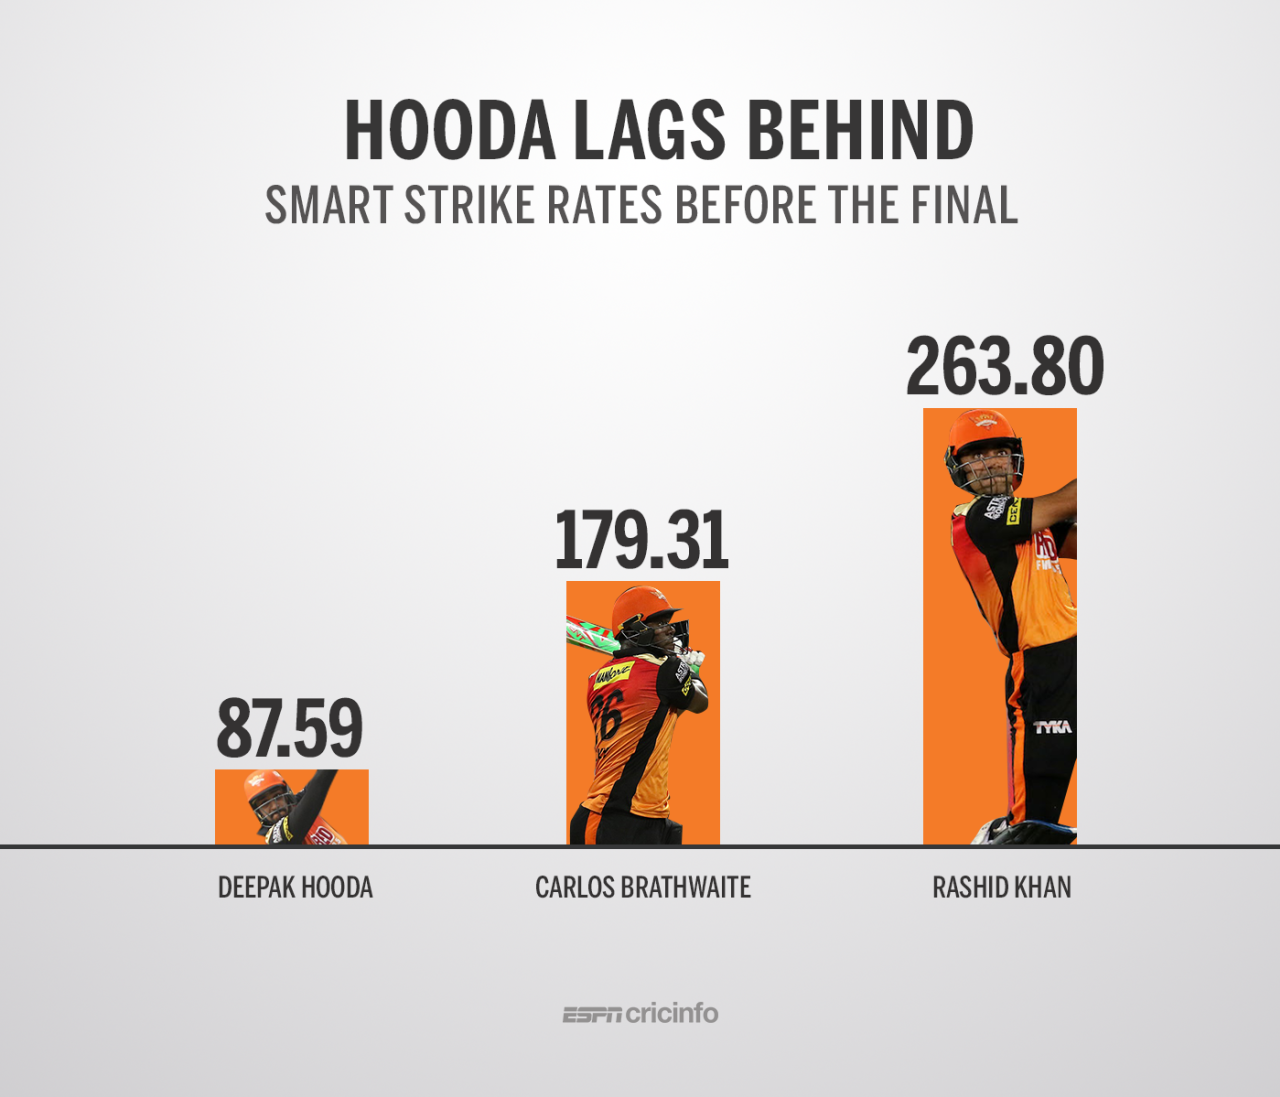 Deepak Hooda was promoted ahead of Rashid Khan and Carlos Brathwaite against Chennai Super Kings despite an inferior smart strike rate